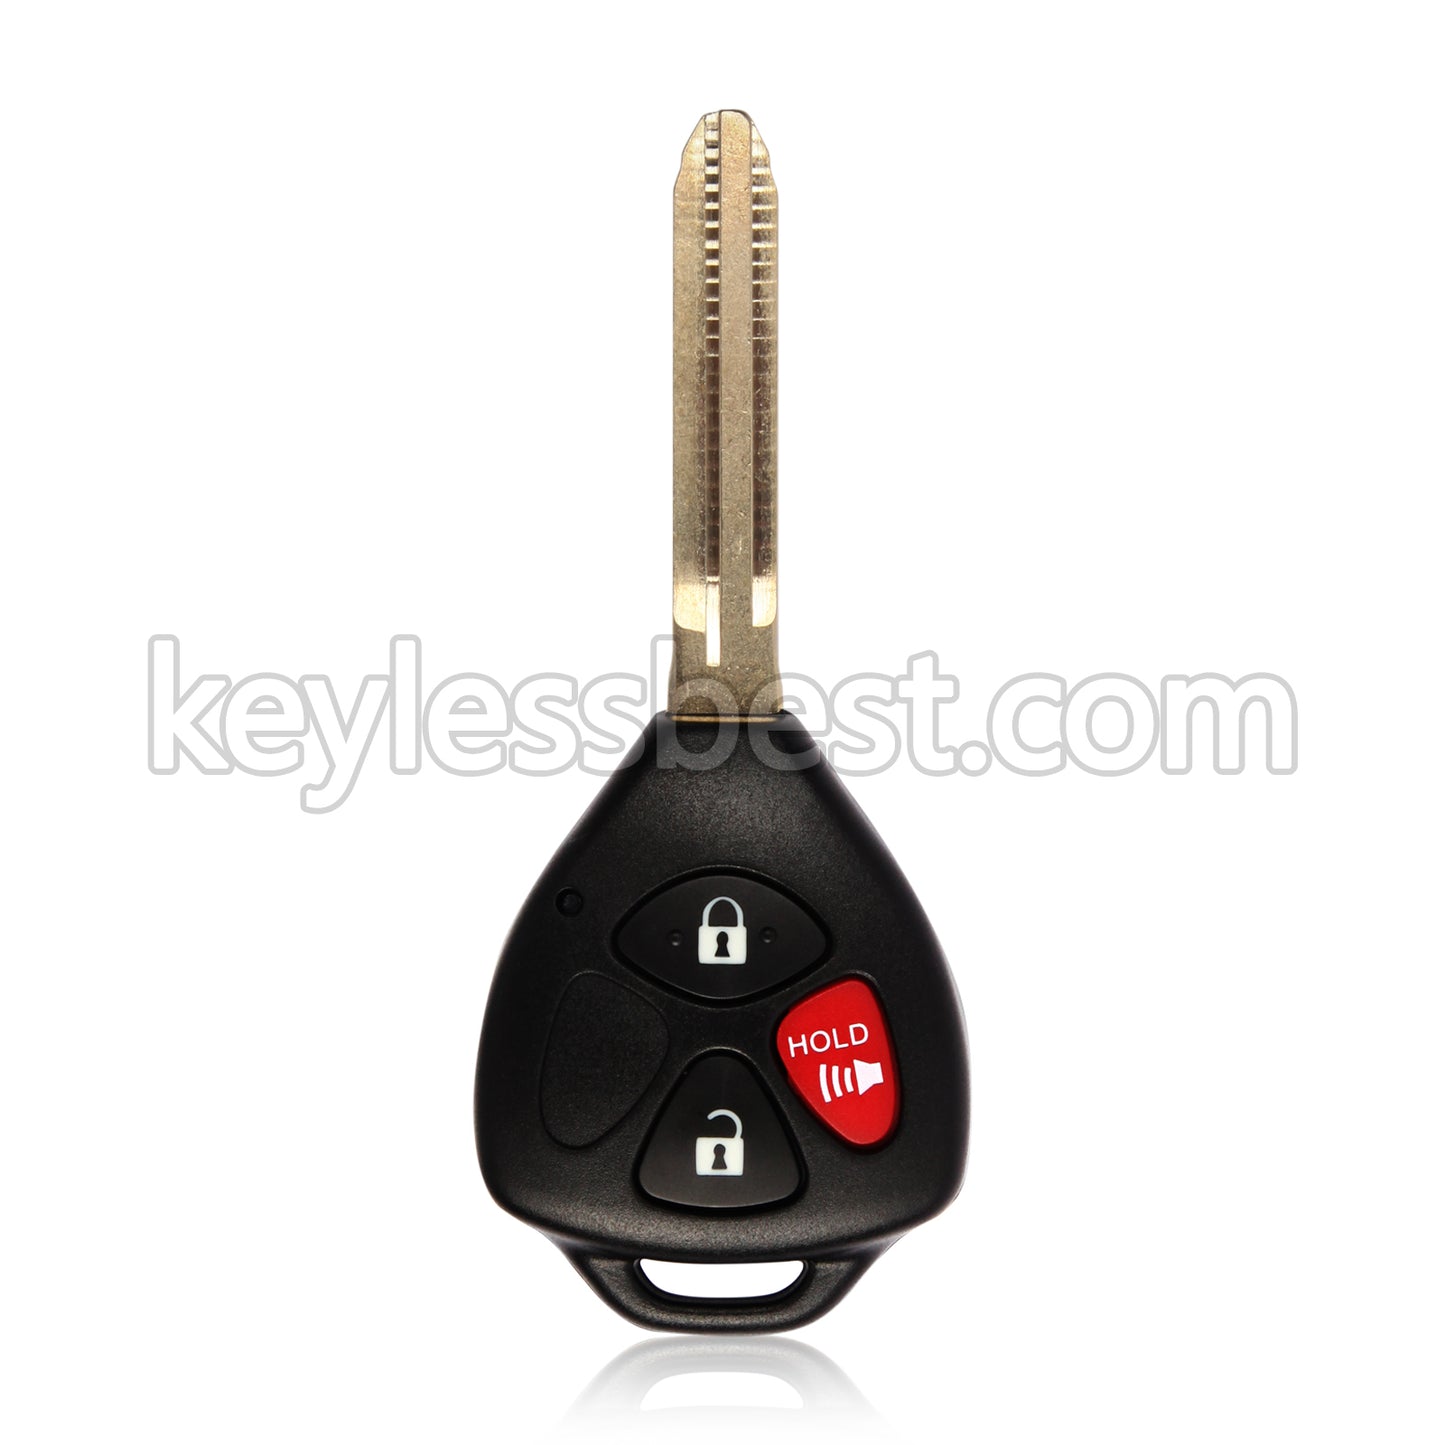 2009 - 2016 Toyota Venza Matrix / 3 Buttons Remote Key / GQ4-29T GQ429 / 312MHz